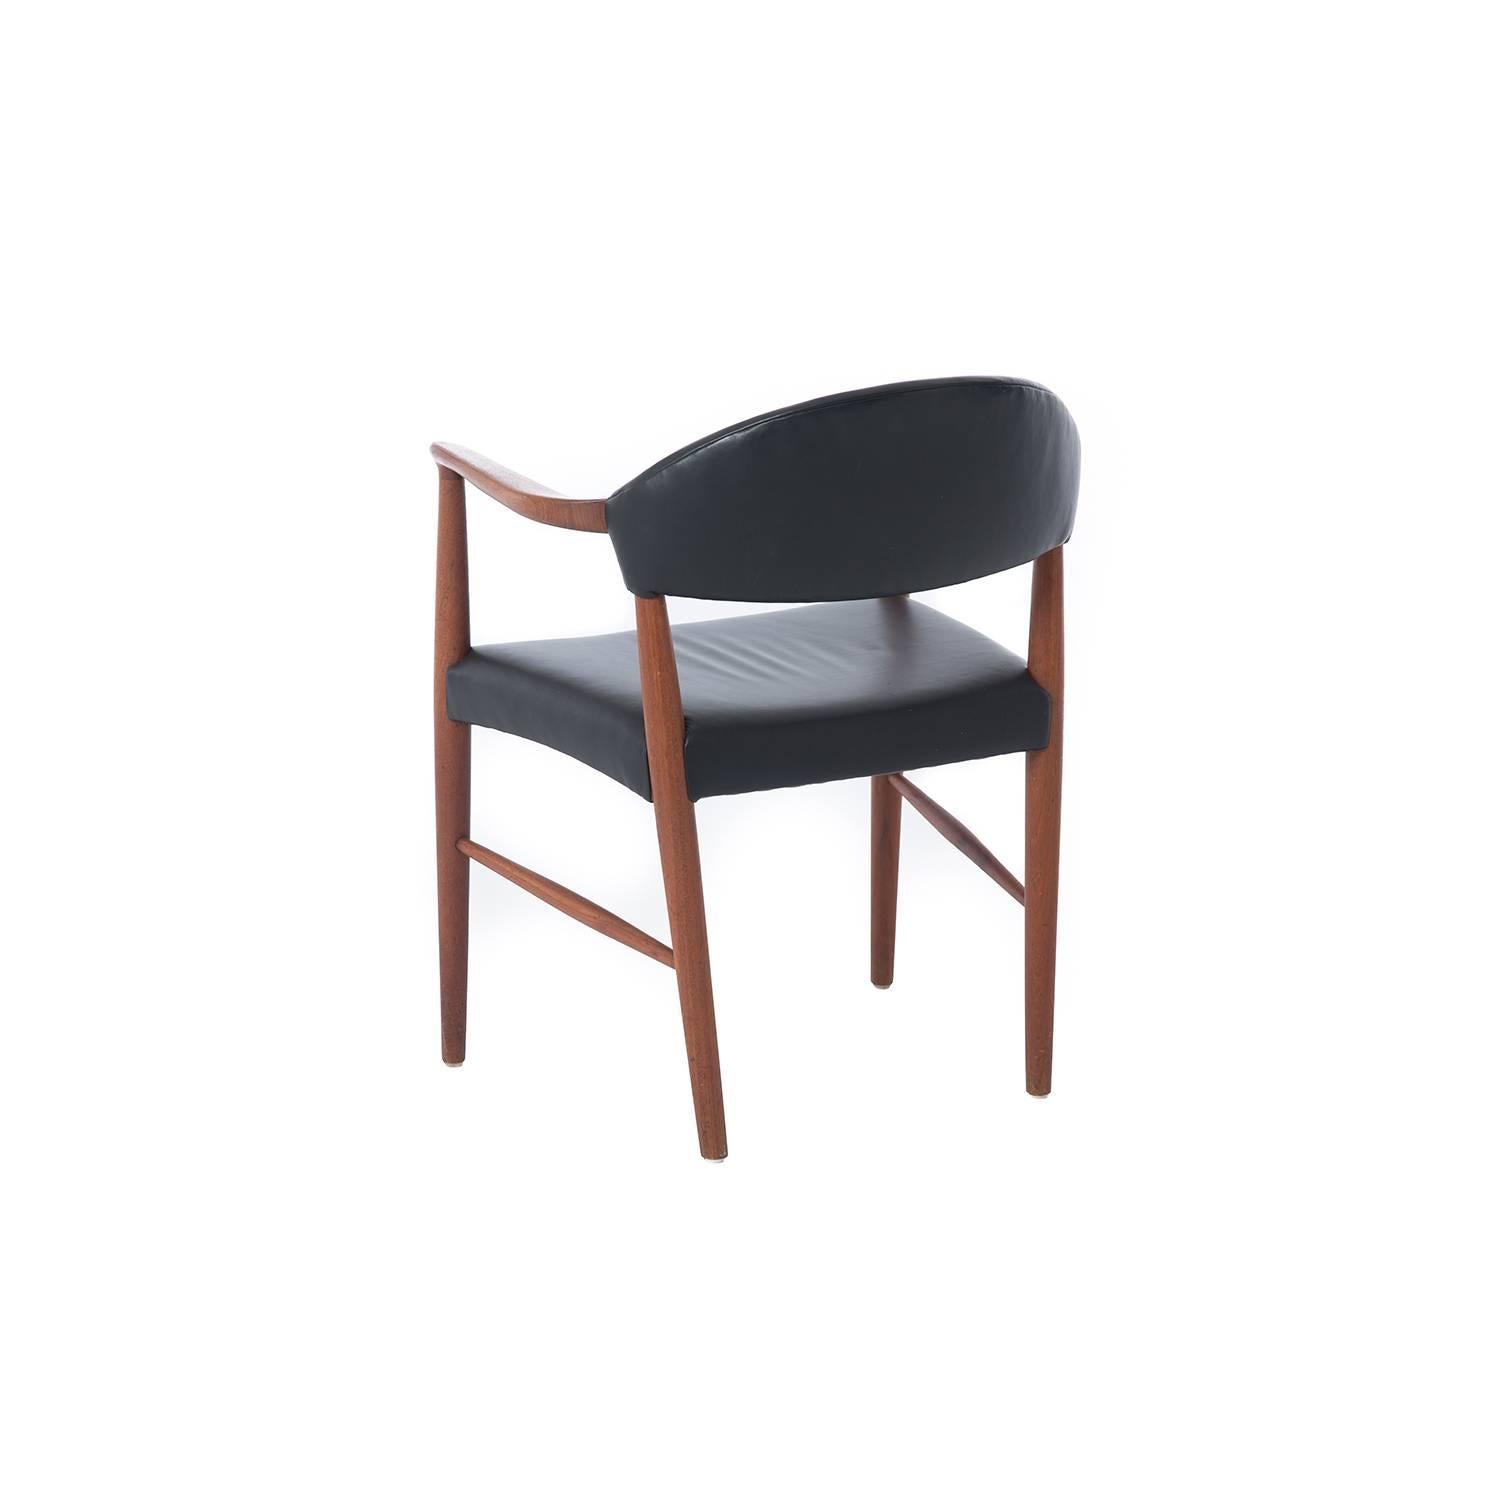 Oiled Danish Modern Side Chair